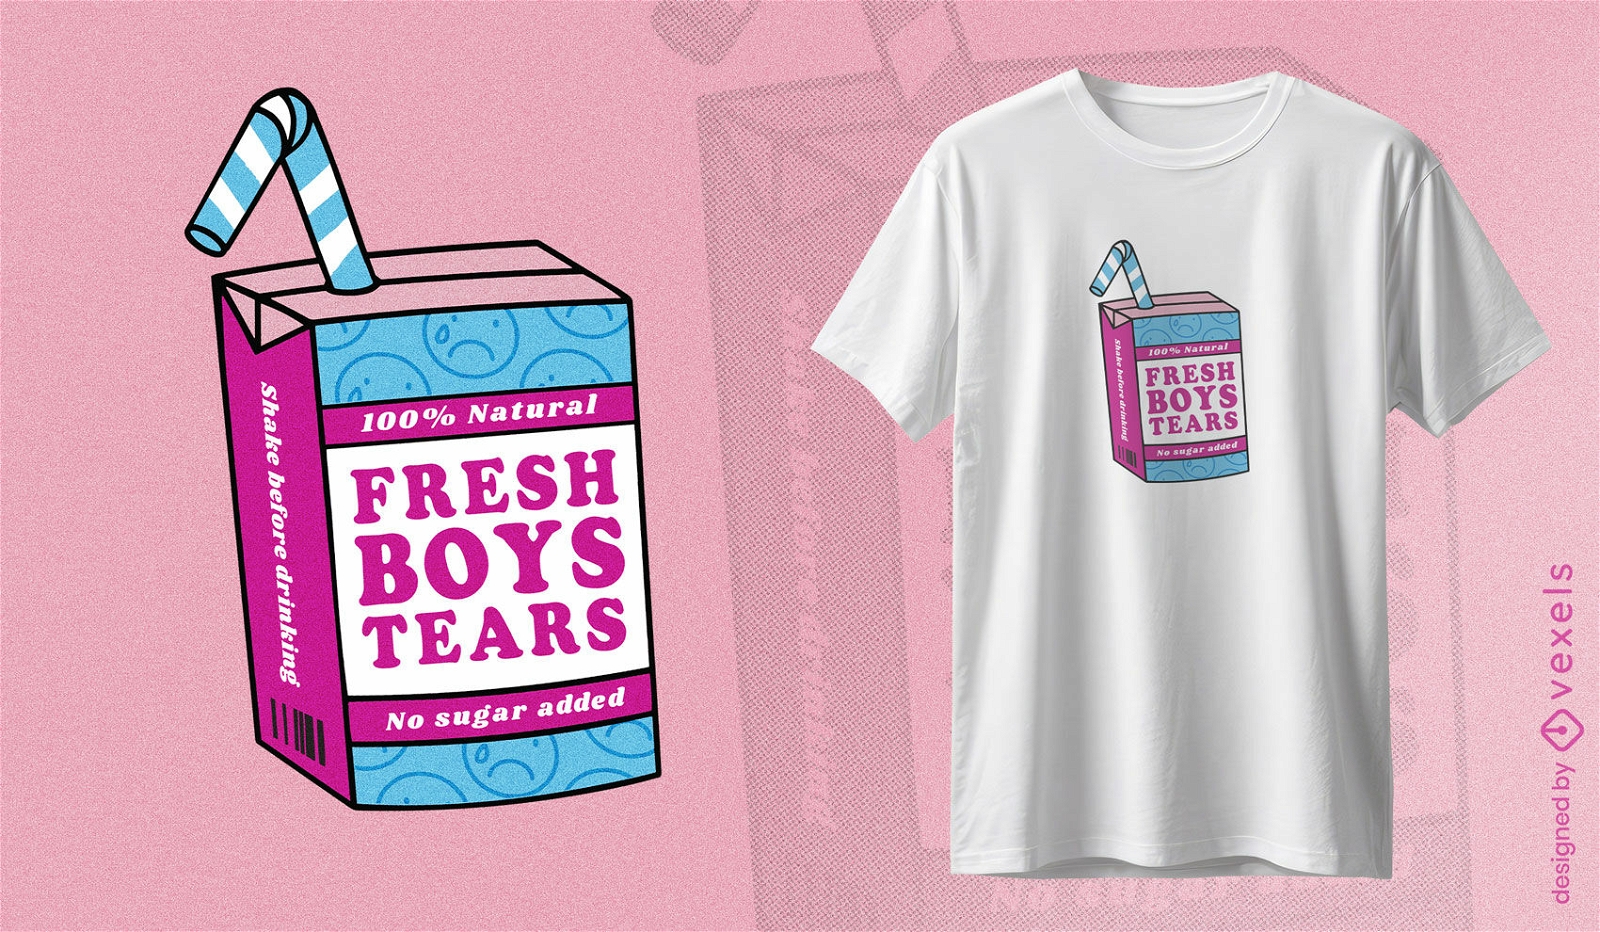 Sassy boys' tears t-shirt design